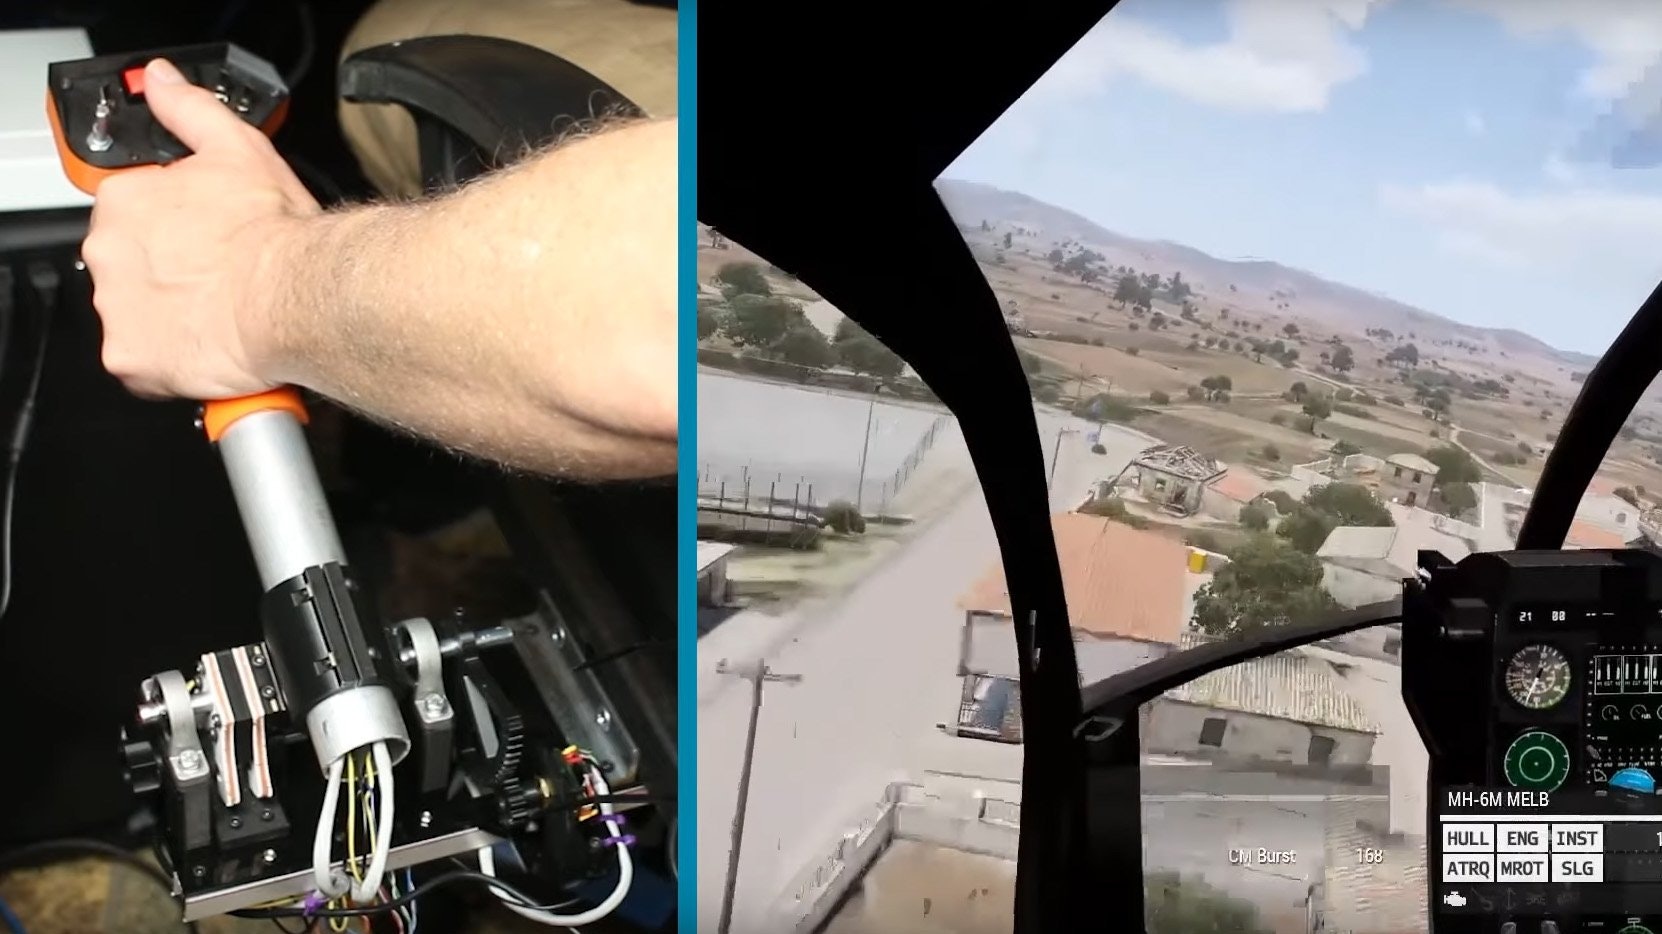 Helicopter Flight Simulator Controls